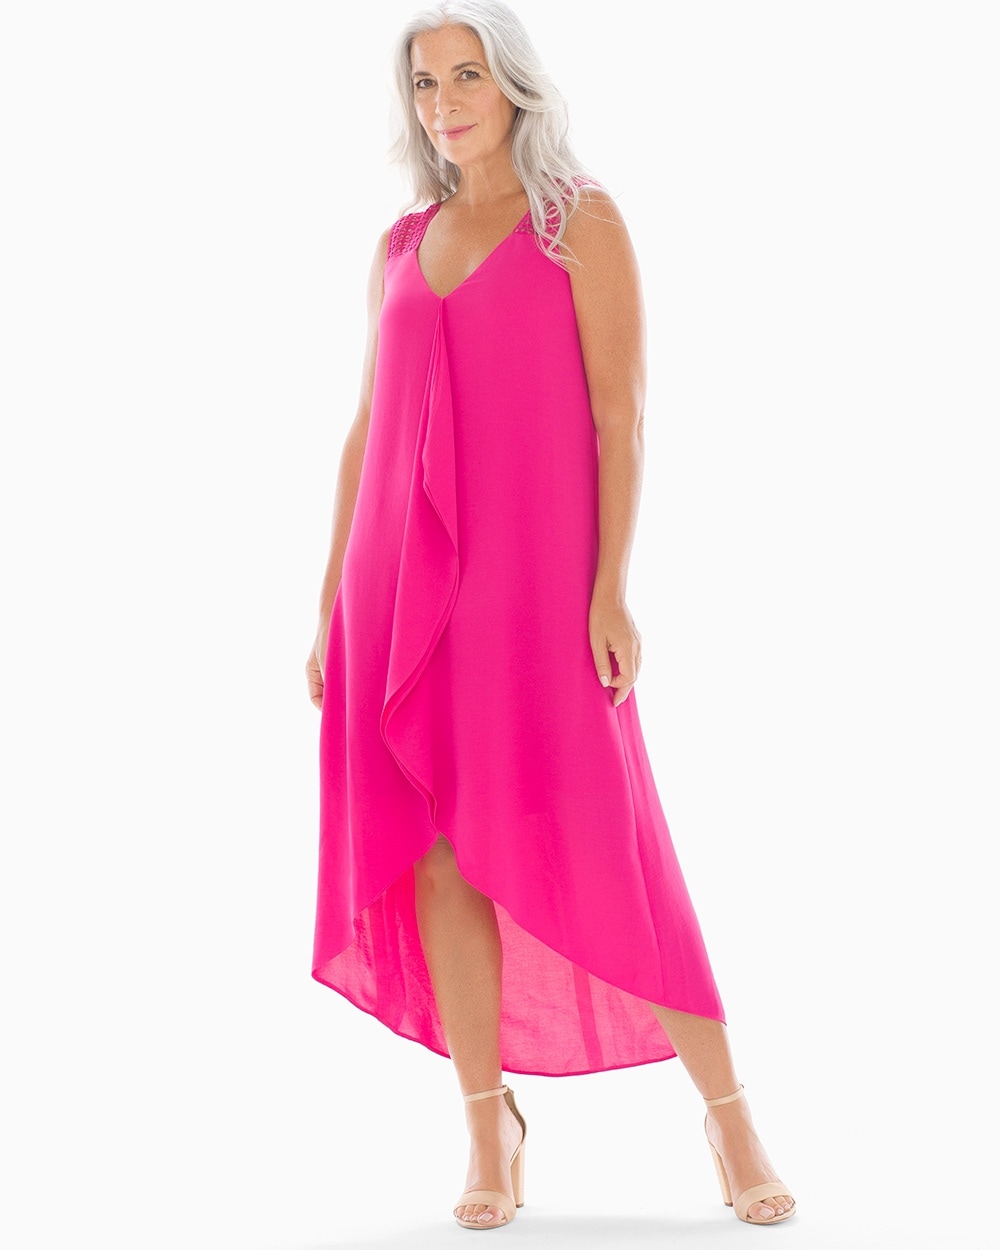 Adrianna Papell Sleveless Dress Bright Pink